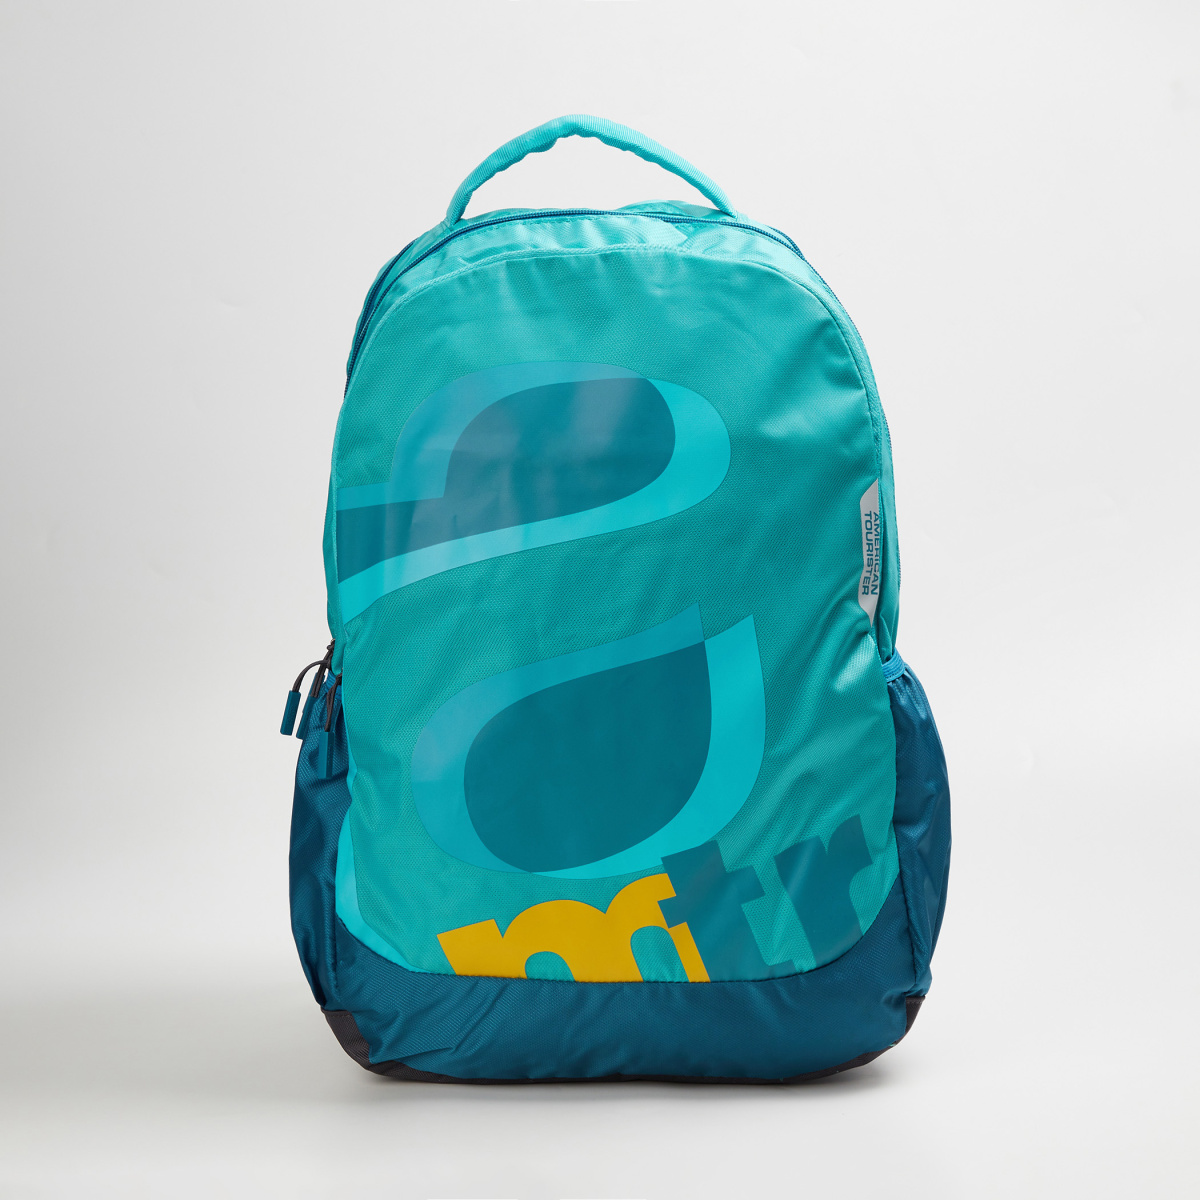 American Tourister Kids Bag - Buy Students School Bags